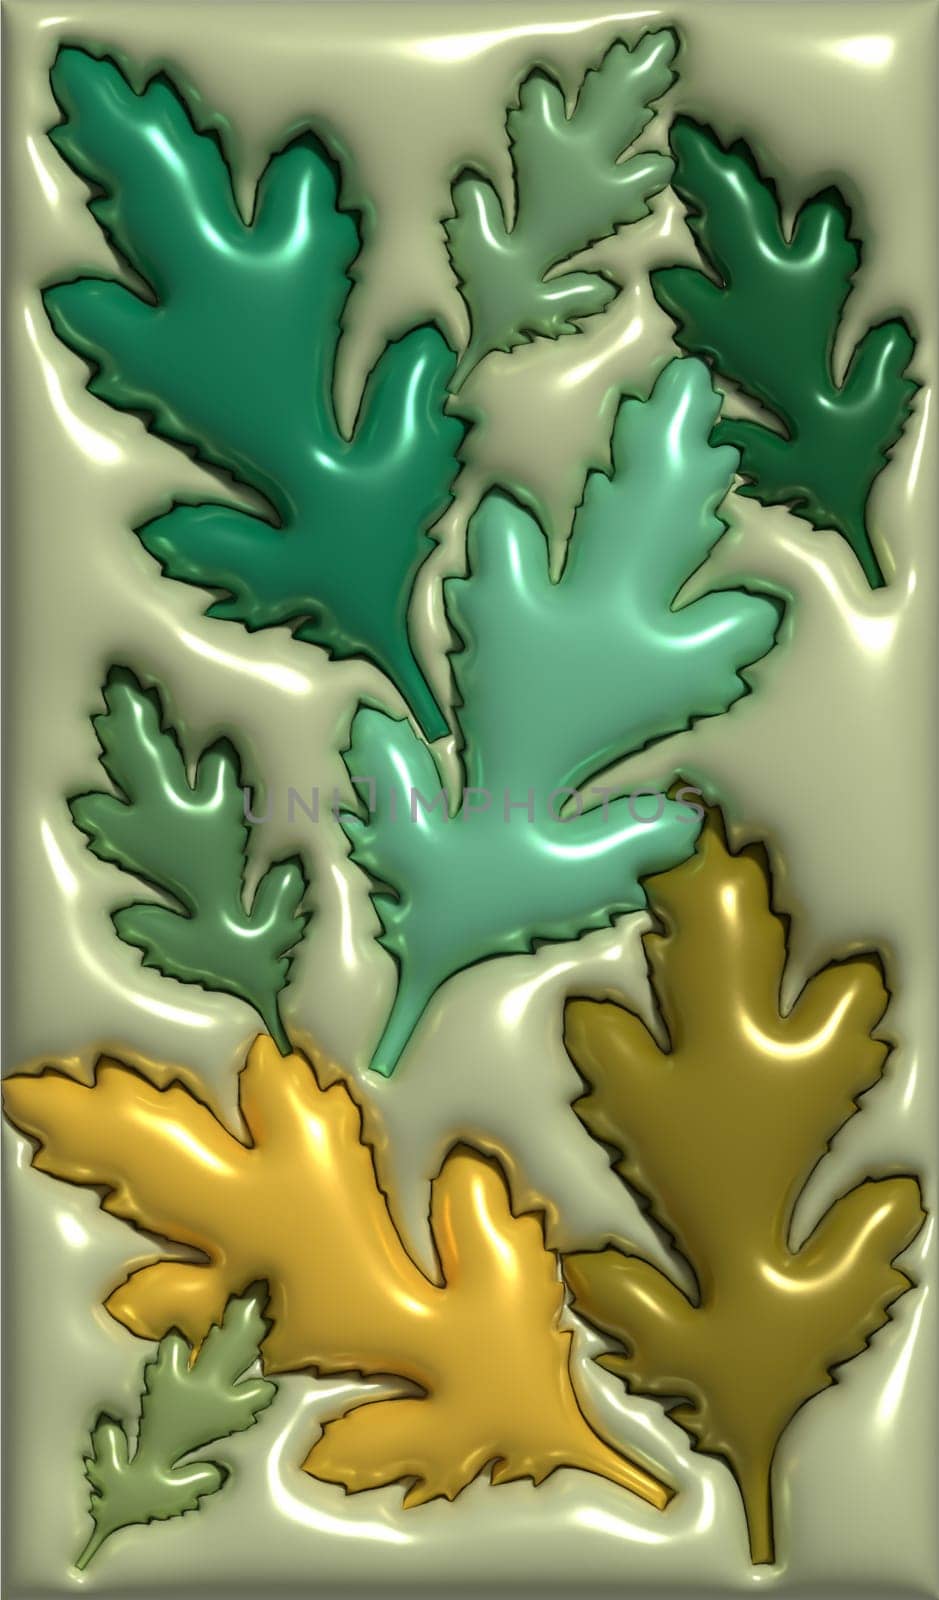 Green chrysanthemum leaves, 3D rendering illustration by ndanko